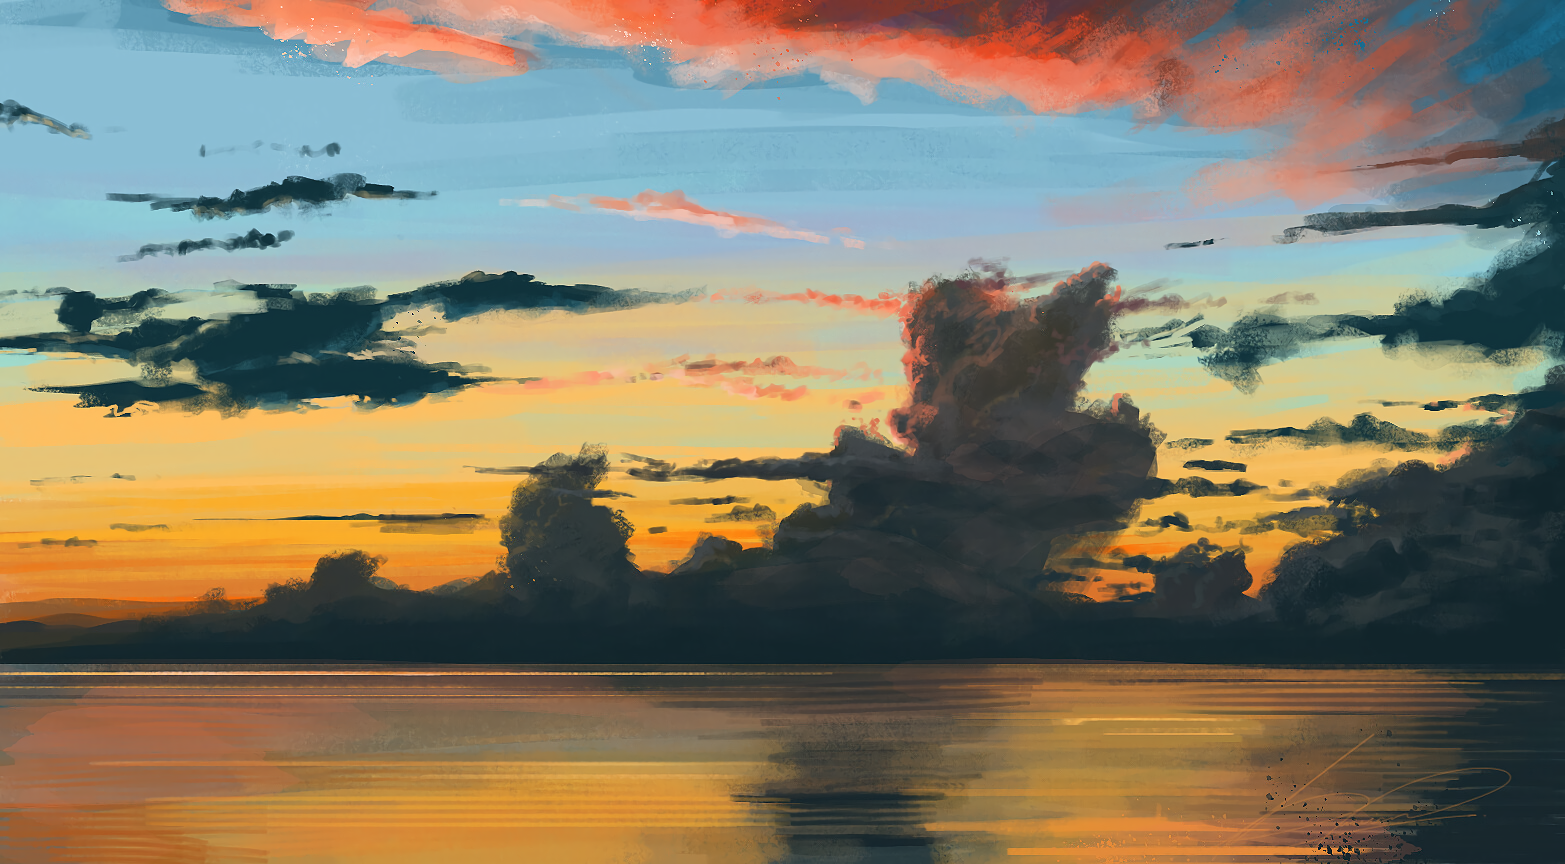 Sky Clouds Sea Artwork Digital Art Illustration Luciano Neves 1565x864